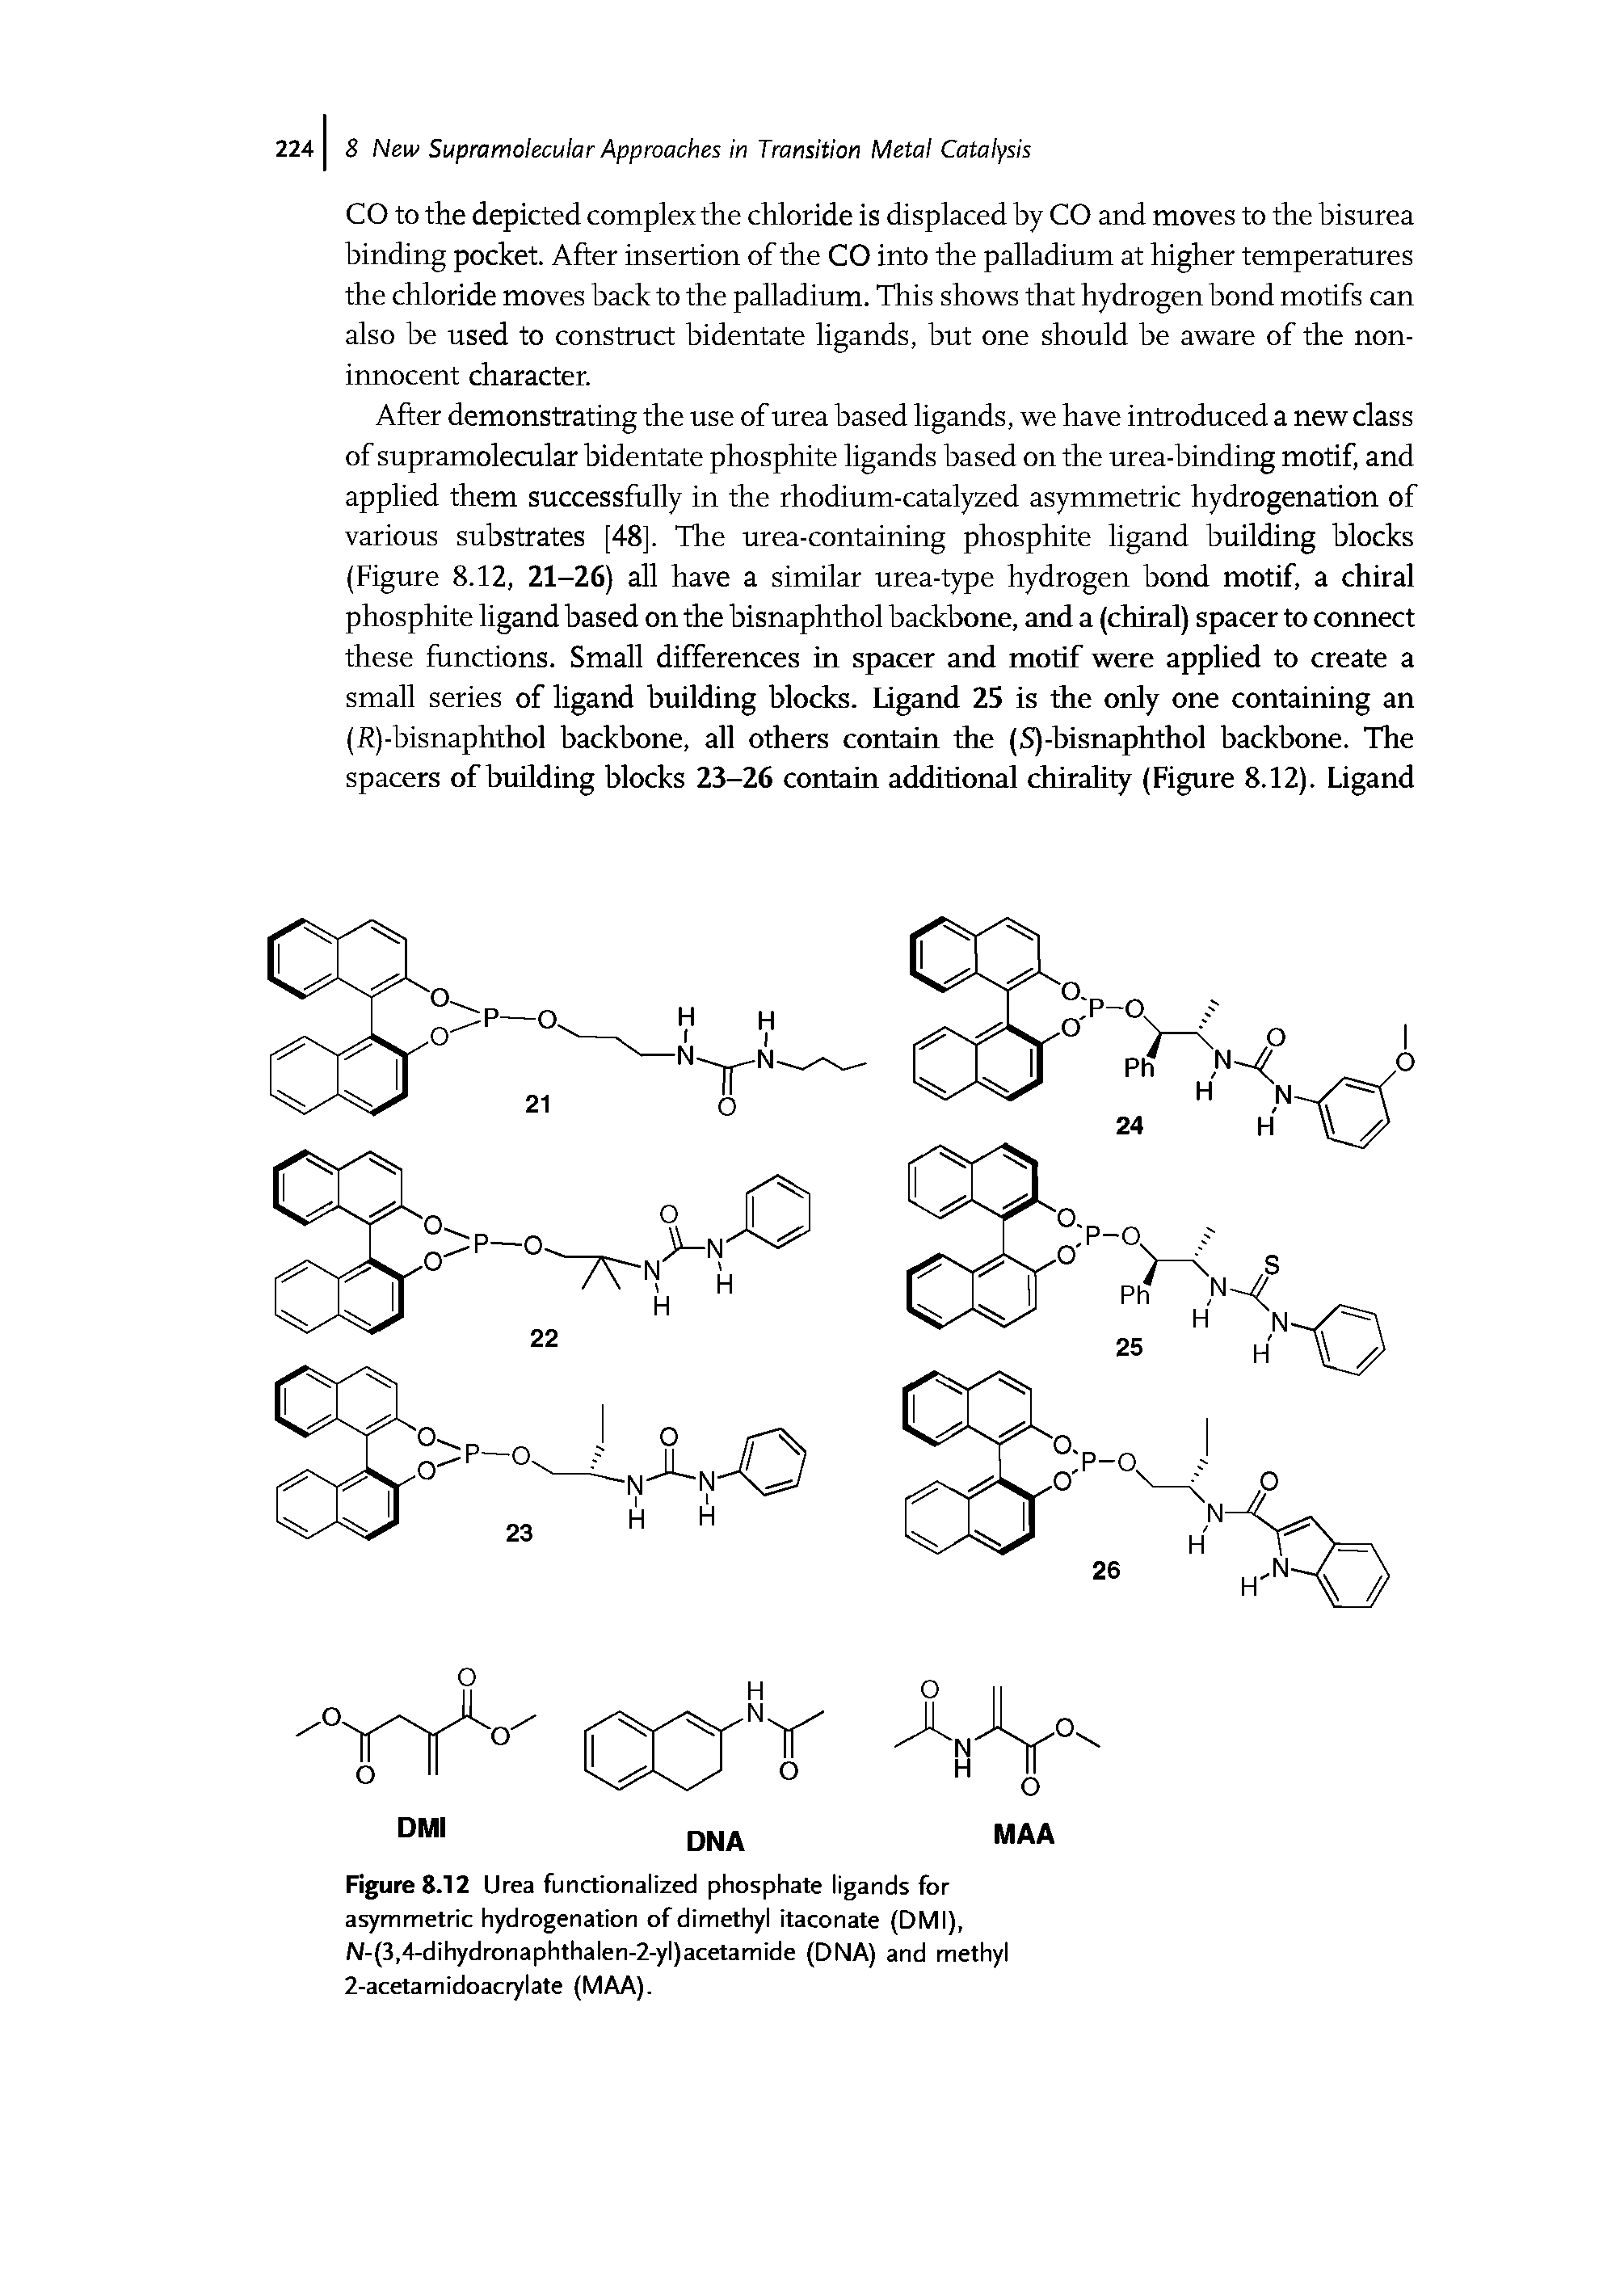 Figure 8.12 U rea functionalized phosphate ligands for asymmetric hydrogenation of dimethyl itaconate (DMI), N-(3,4-dihydronaphthalen-2-yl)acetamide (DNA) and methyl 2-acetamidoacrylate (MAA).